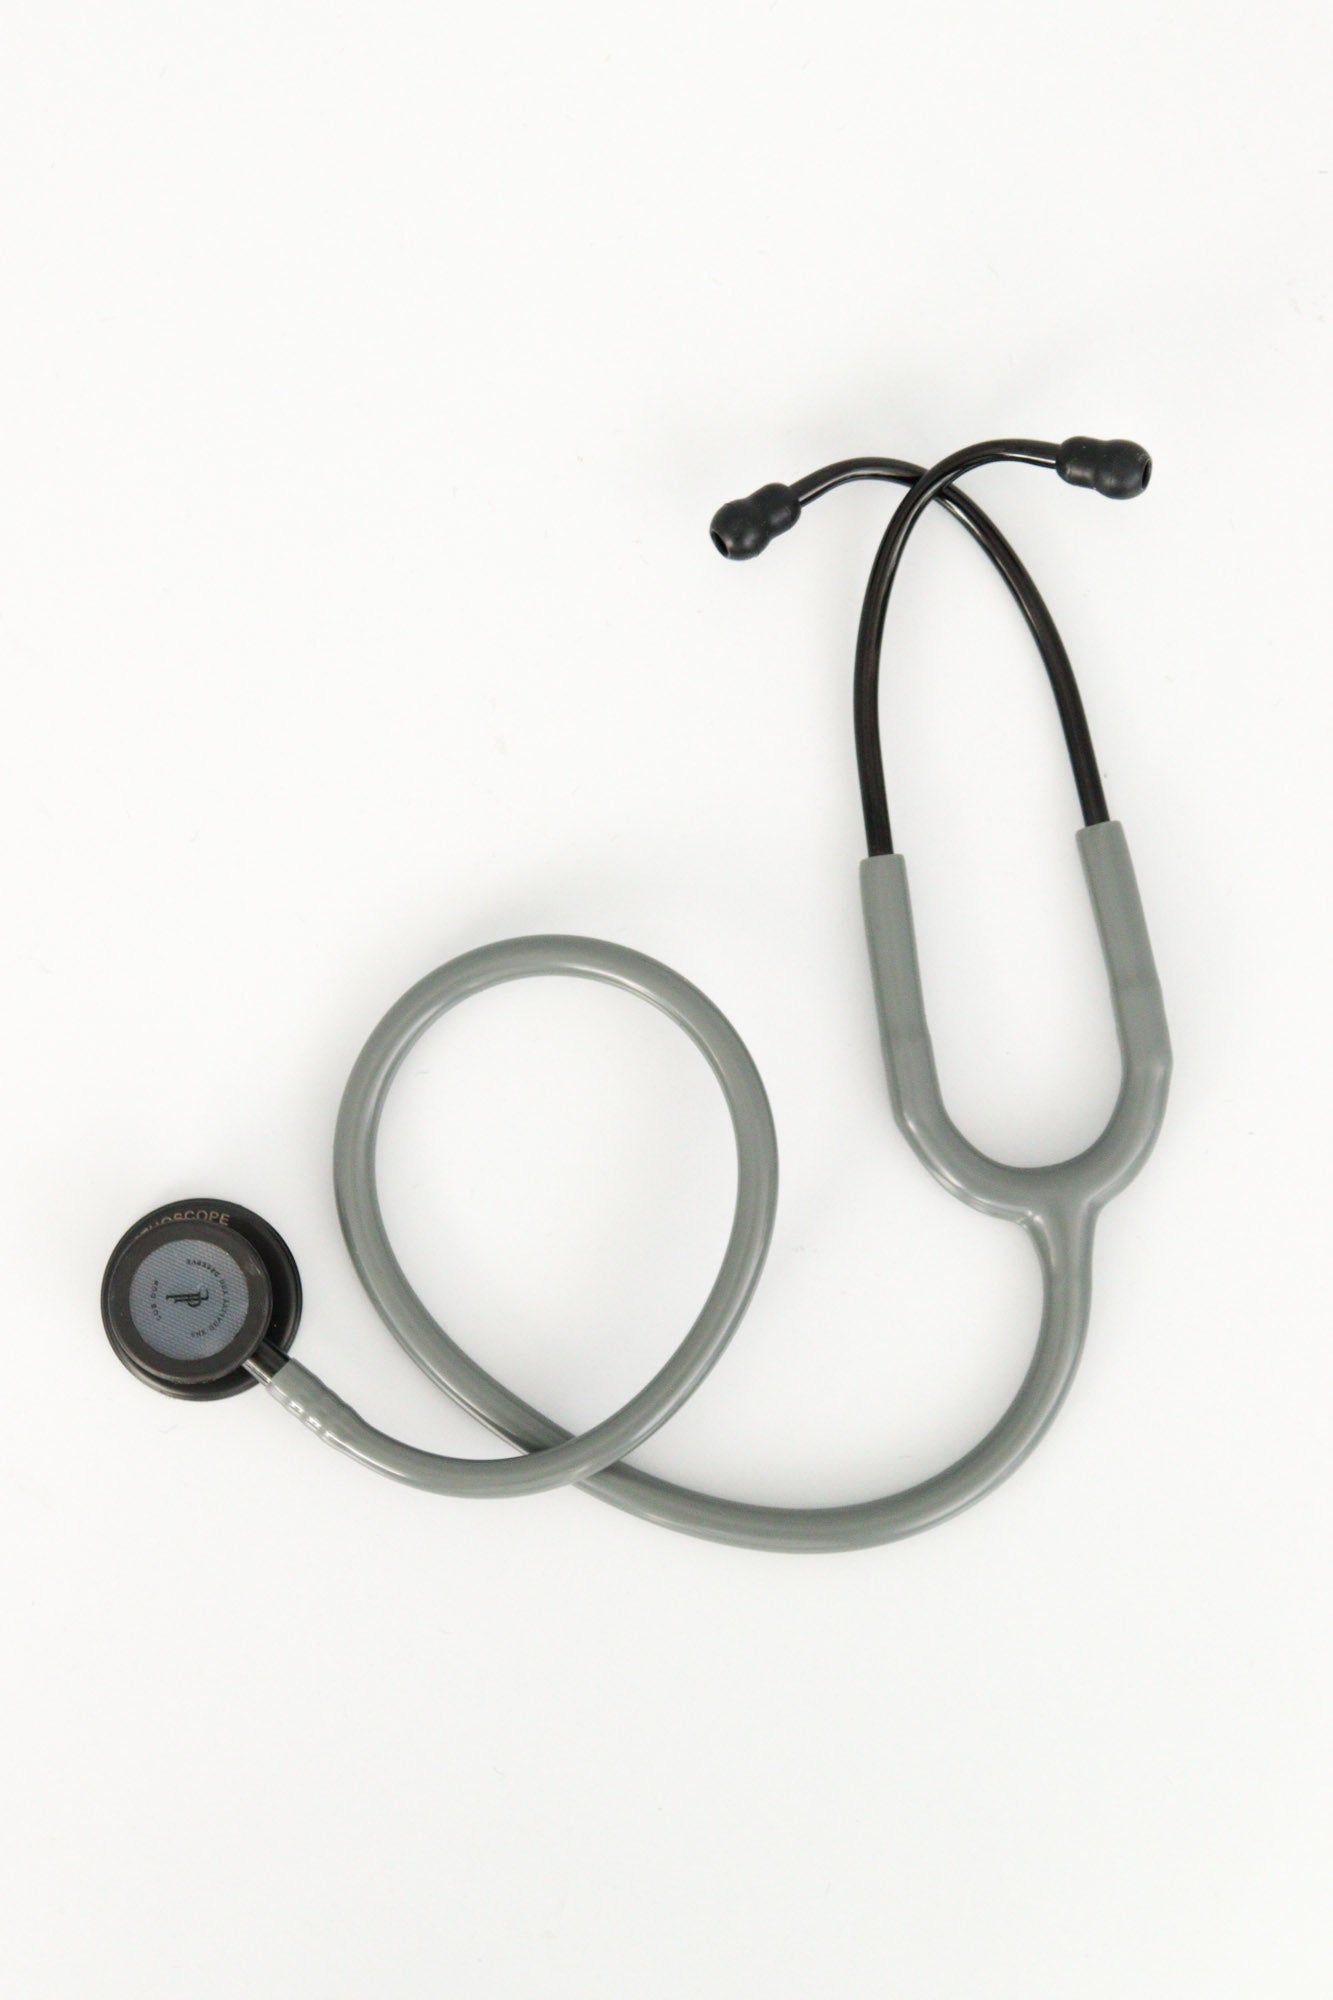 Lub Dup Adult Stethoscope - Gray-Black Edition